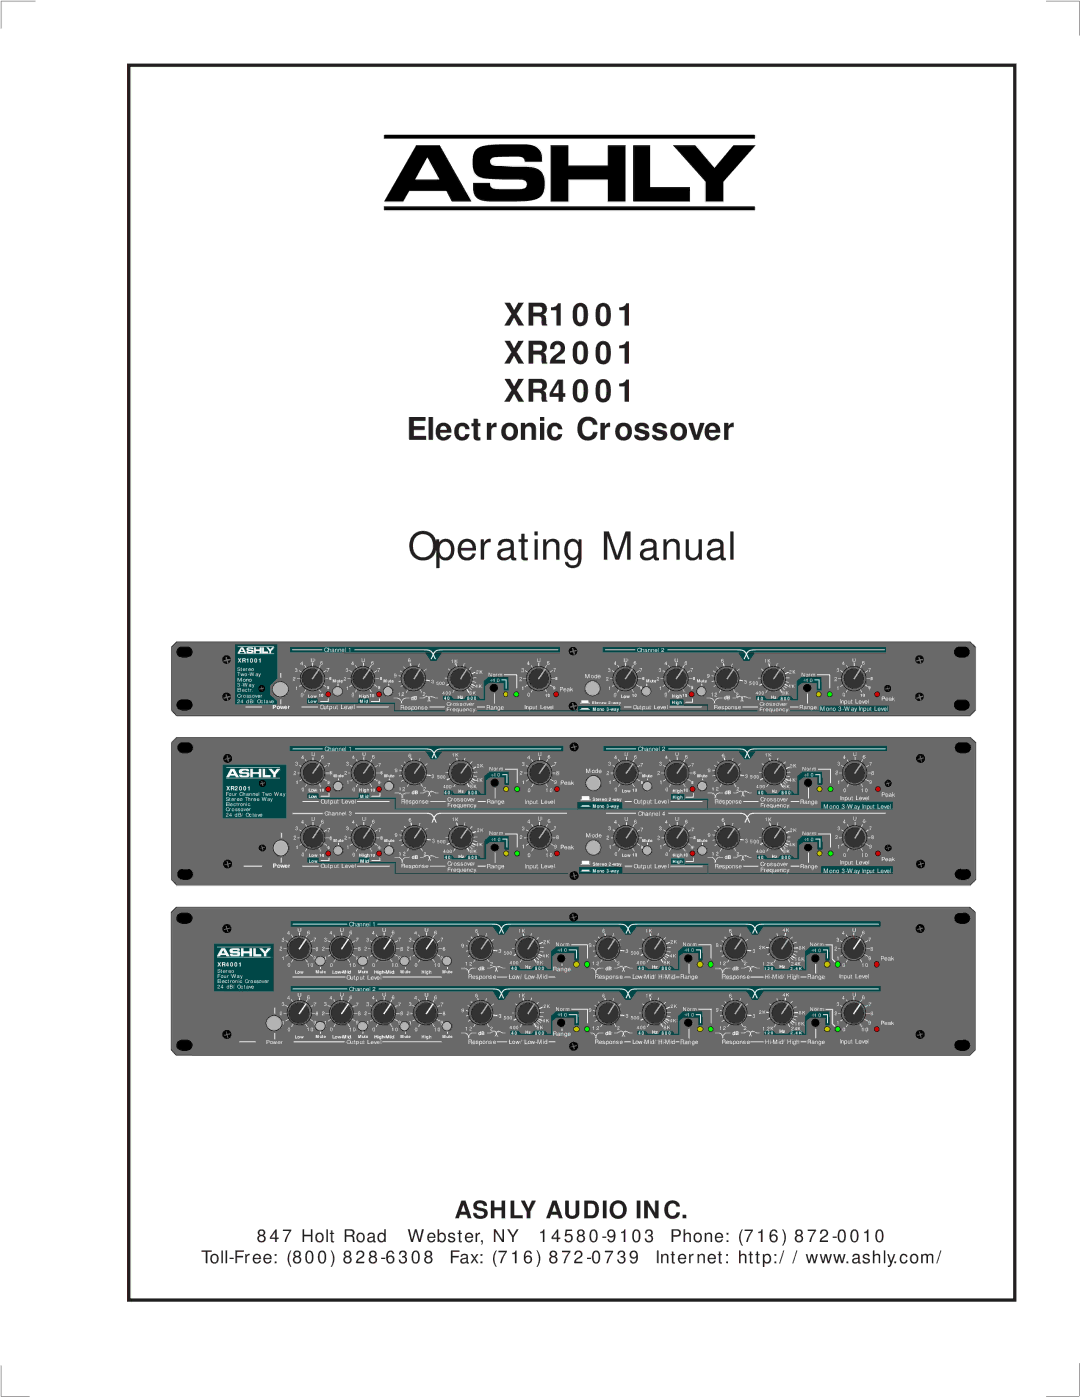 Ashly XR4001, XR2001, XR1001 manual Operating Manual 